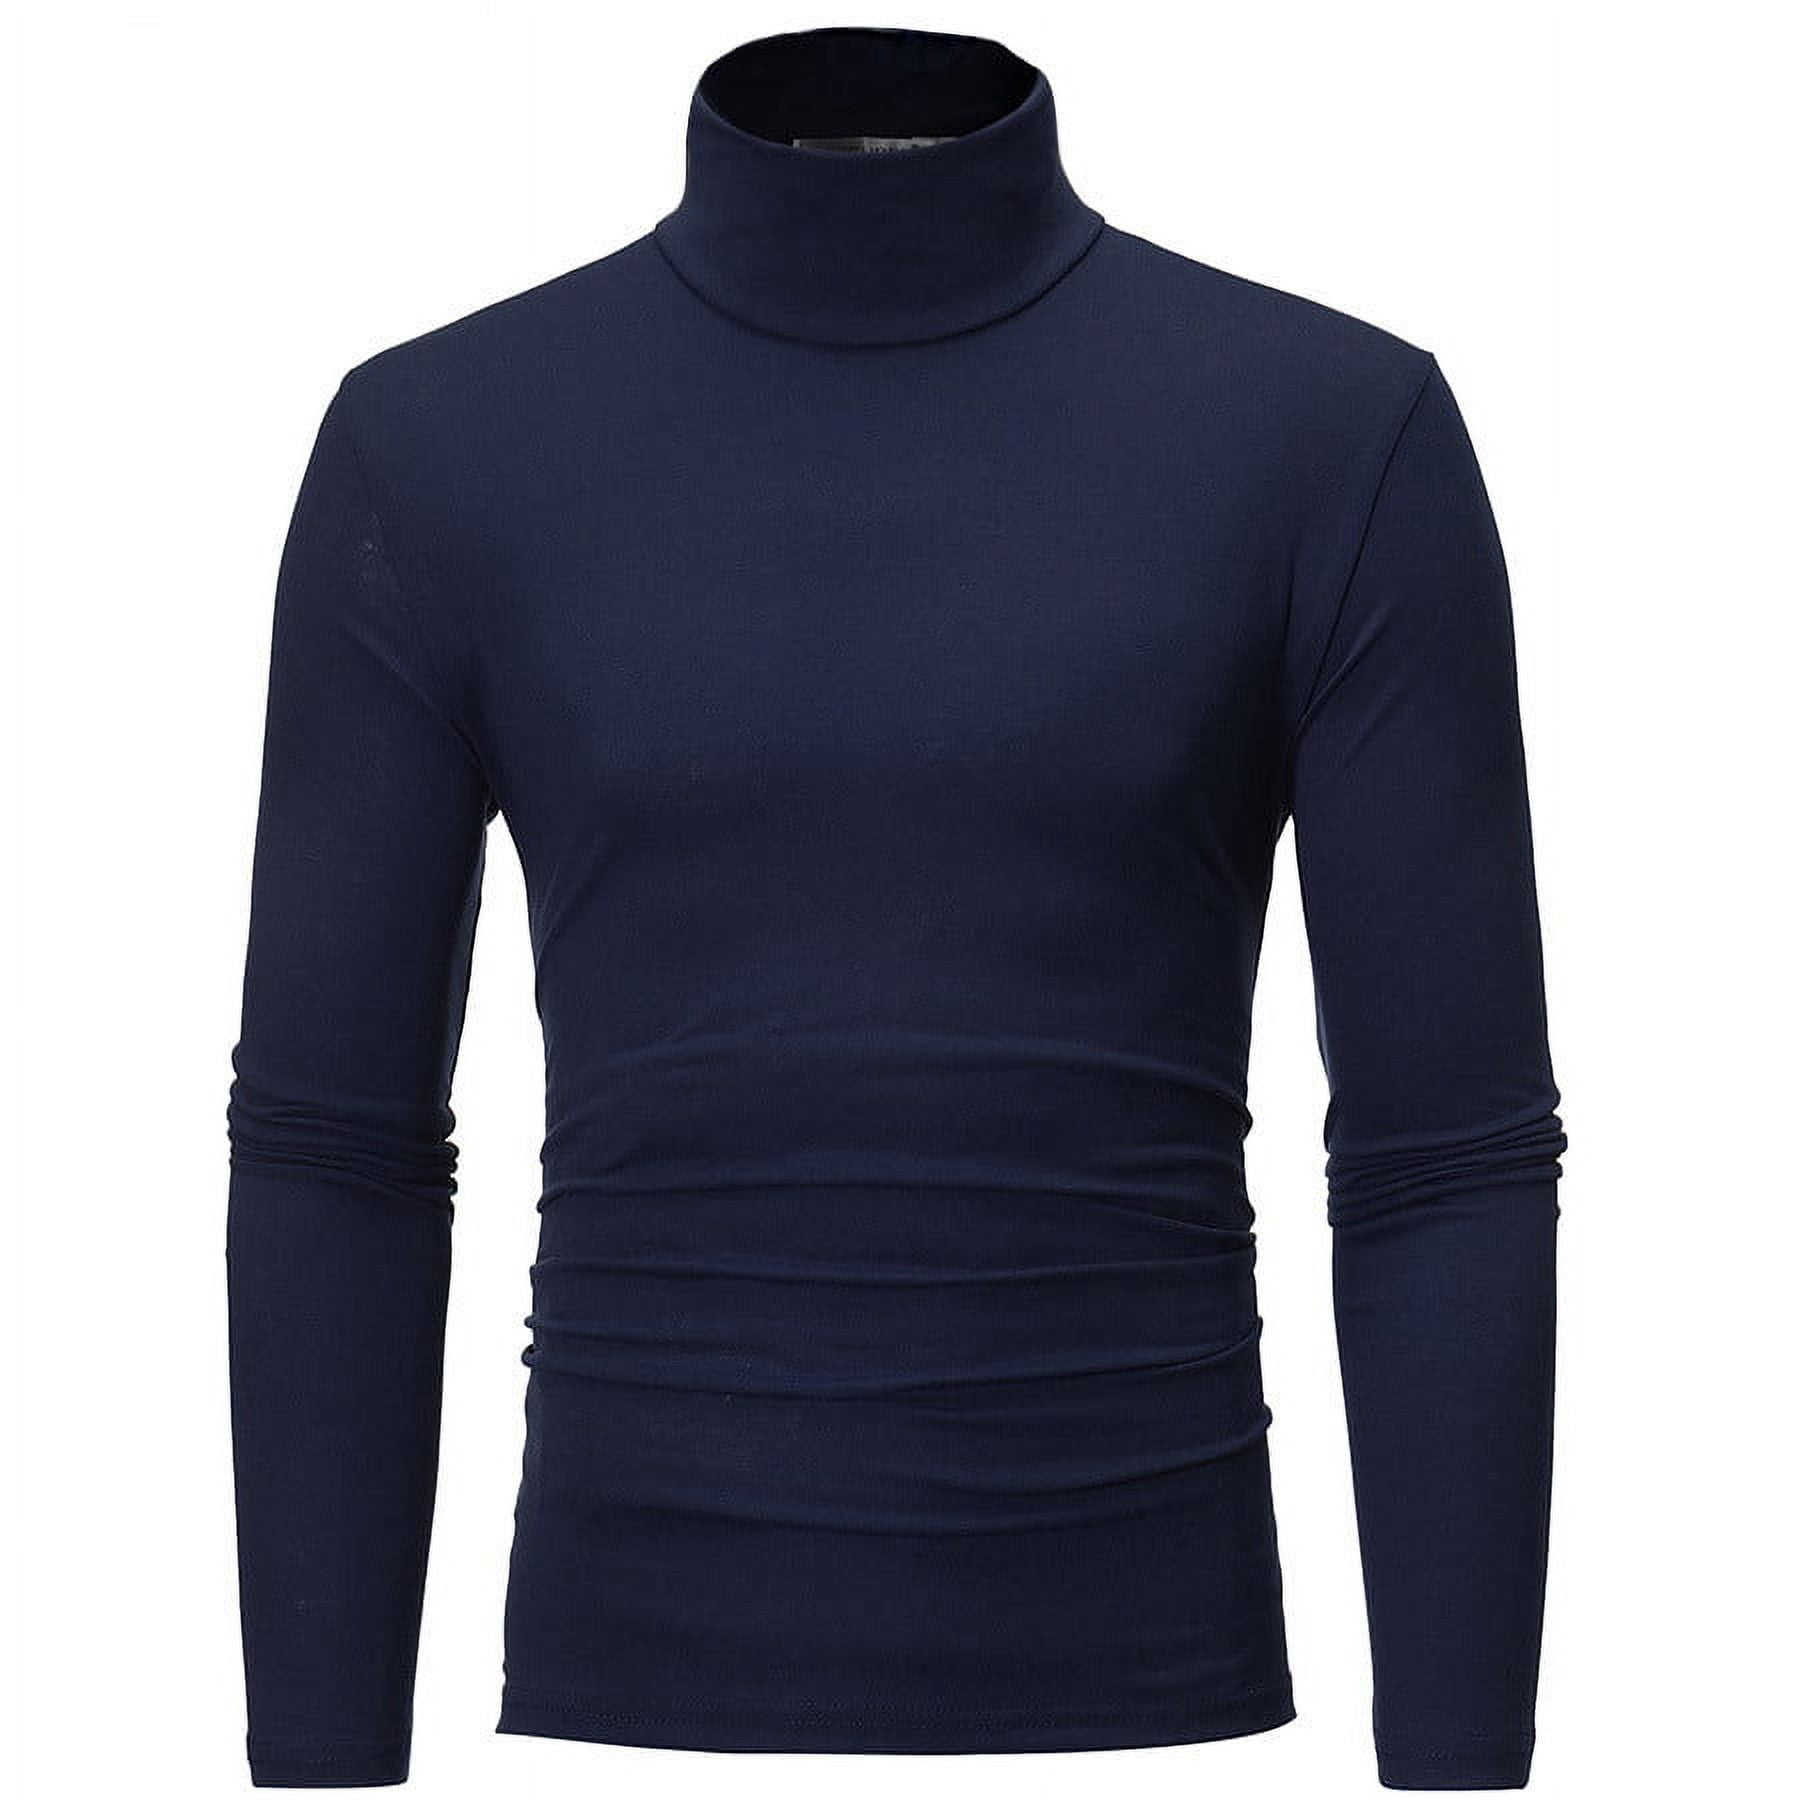 Knosfe Thermal Undershirt for Men Mock Neck Slim Fit Long Sleeve Shirt ...